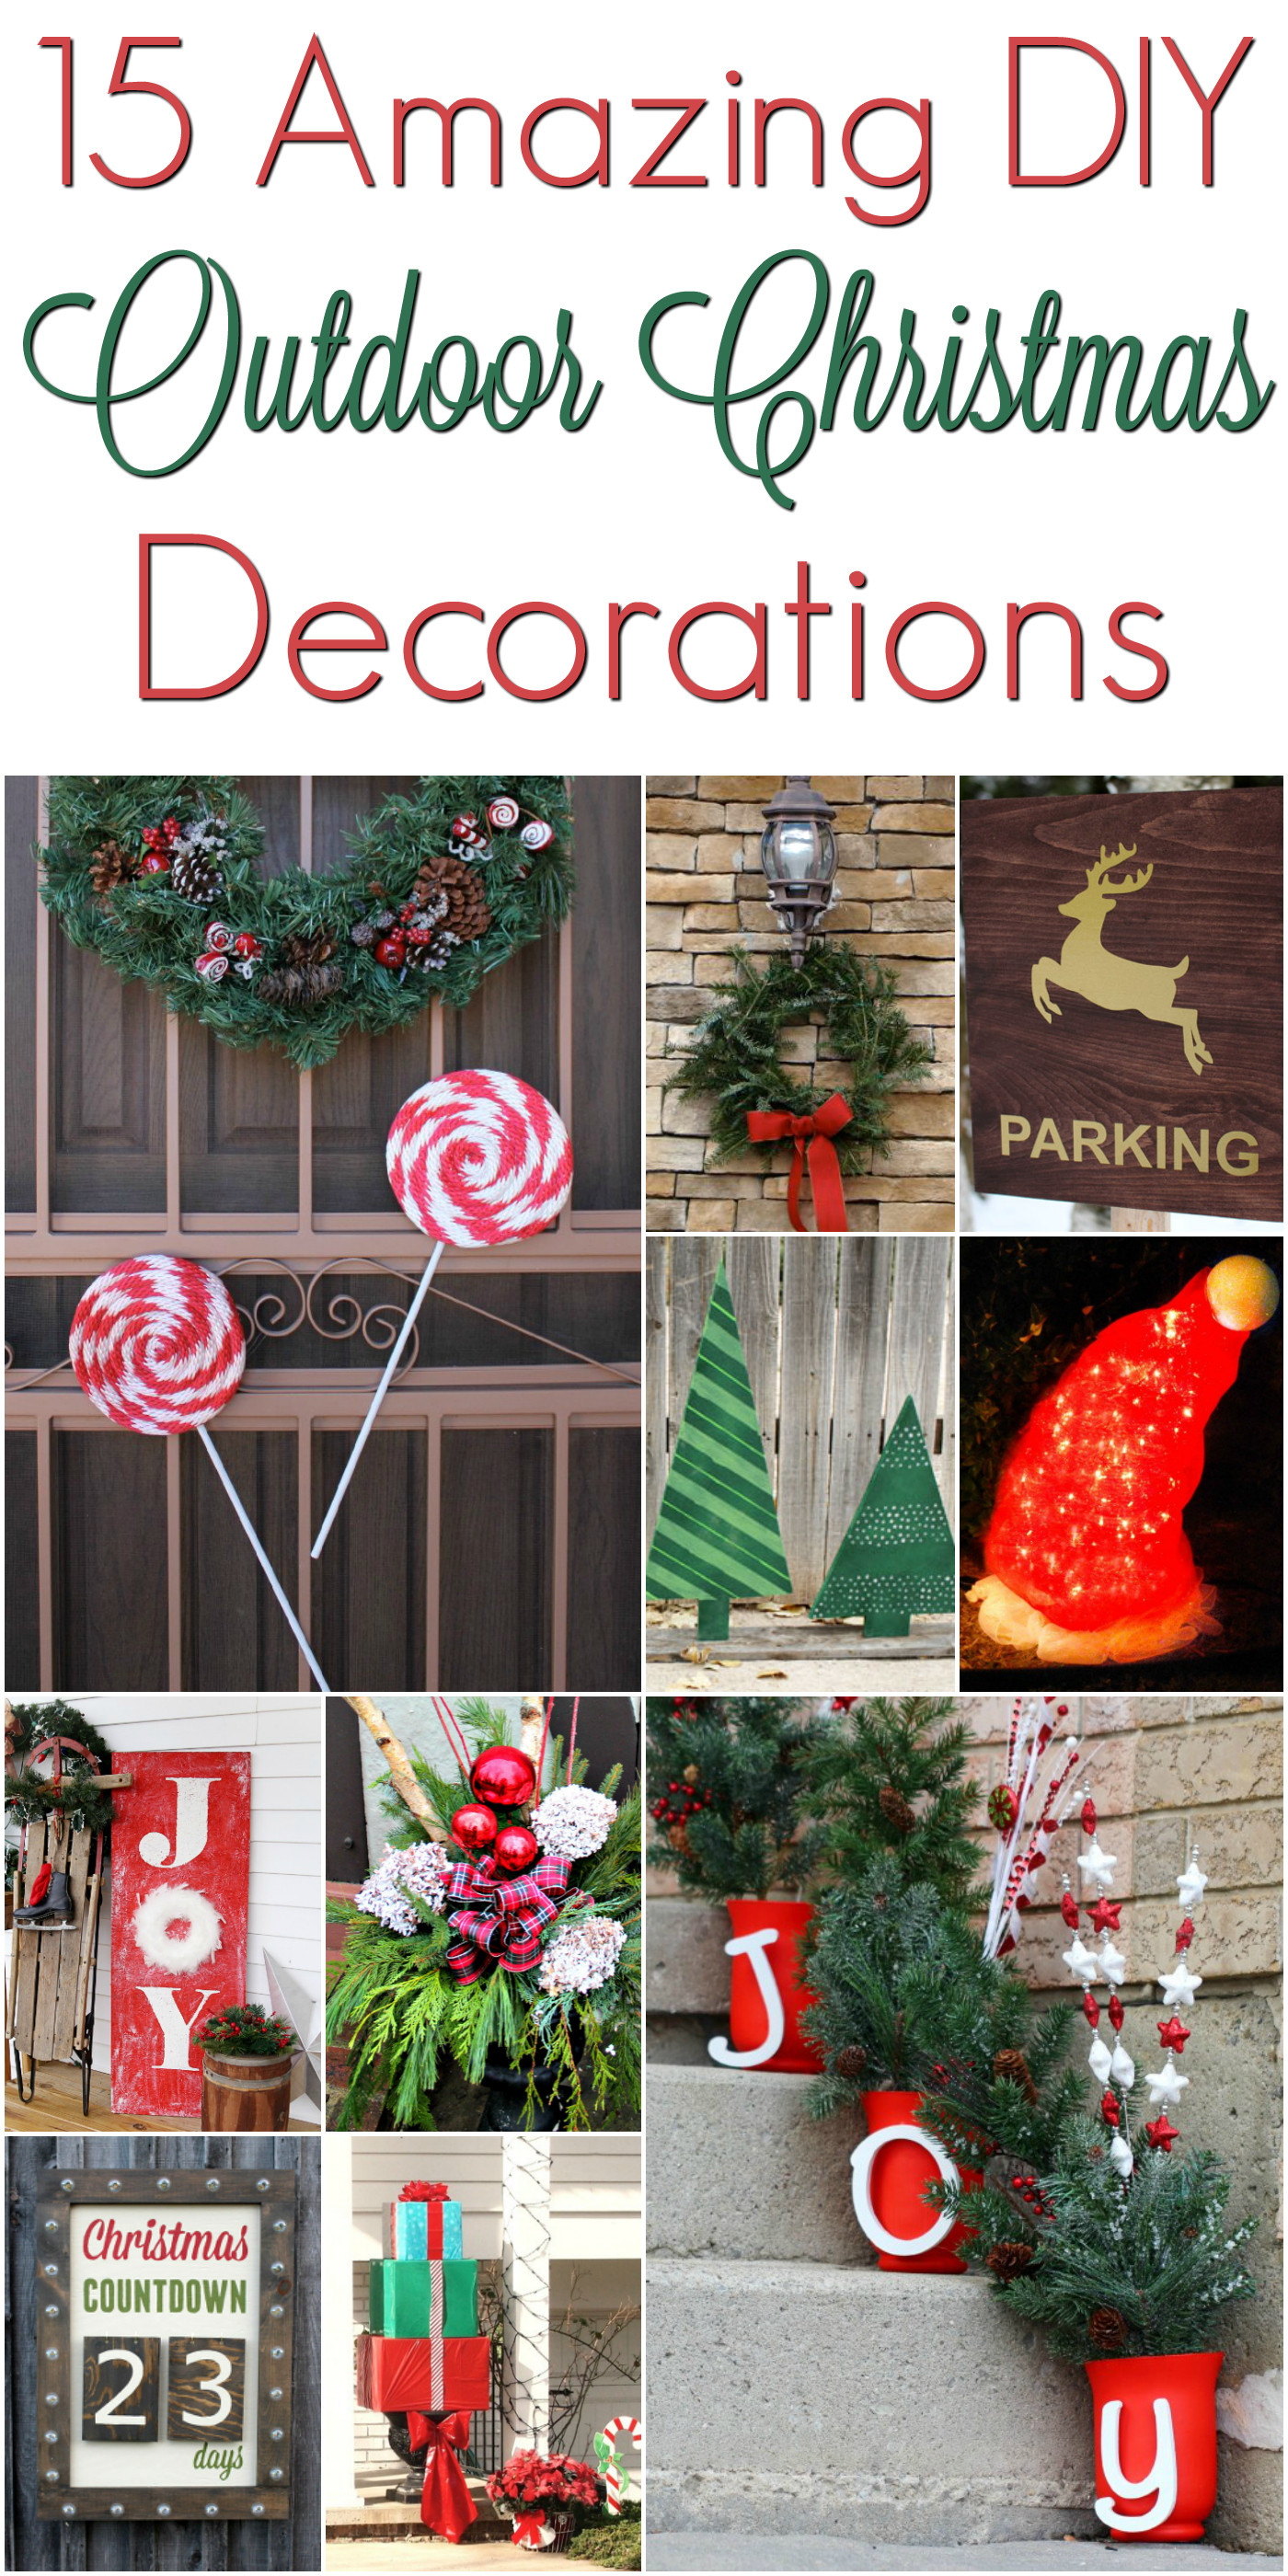 DIY Christmas Decorations Outdoor
 DIY Christmas Outdoor Decorations ChristmasDecorations